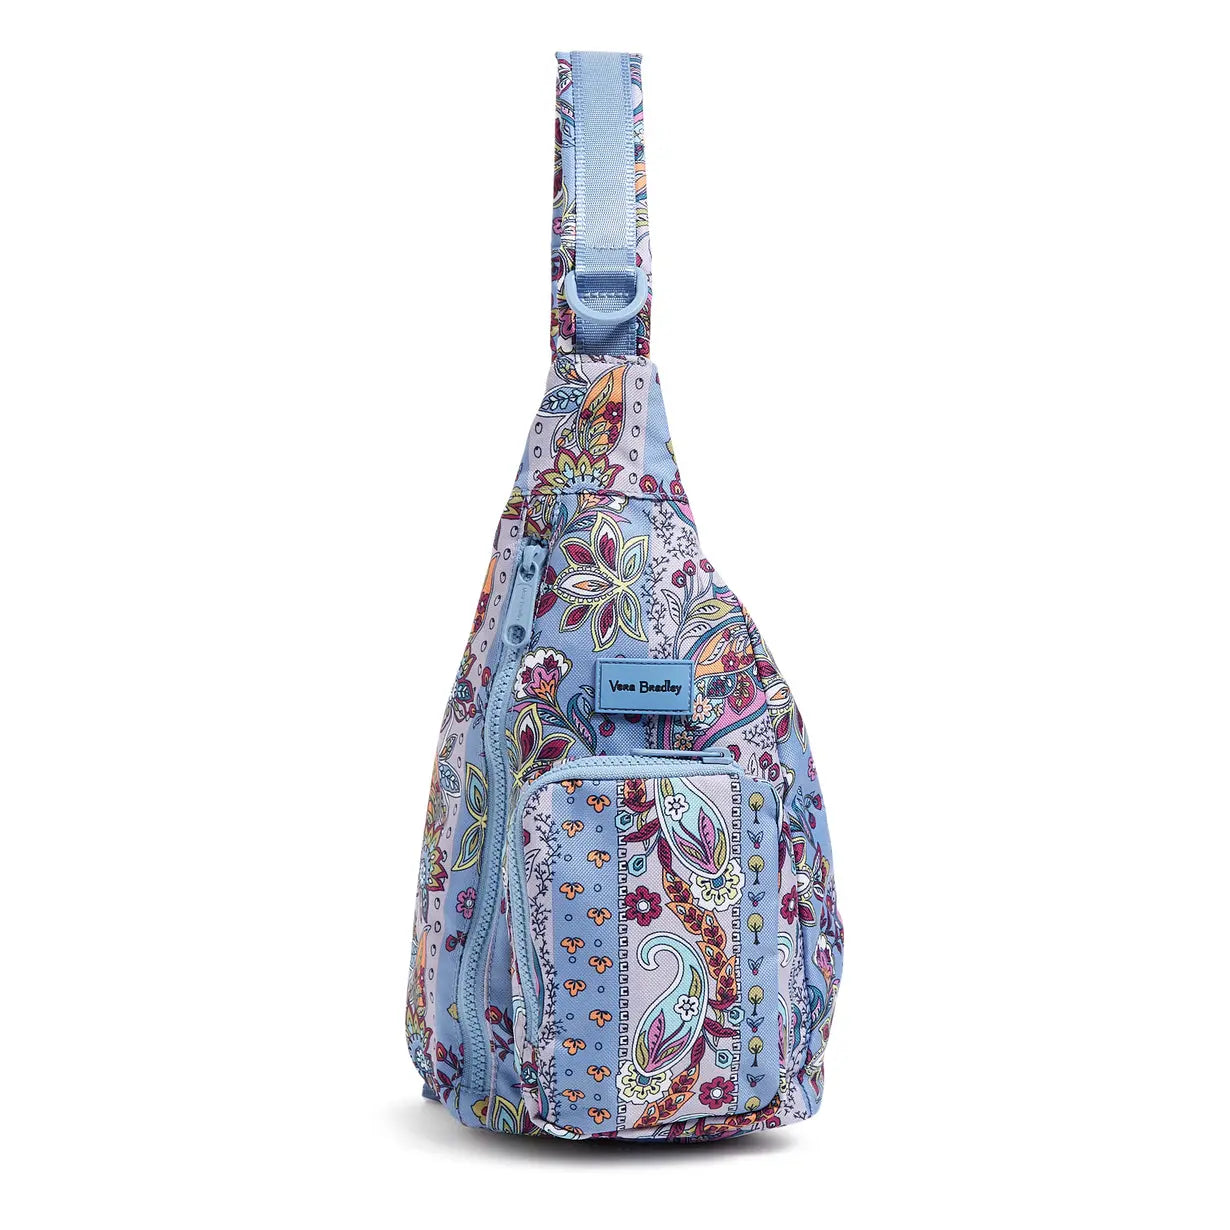 Vera Bradley ReActive Mini Sling Backpack in Provence Paisley Stripes.